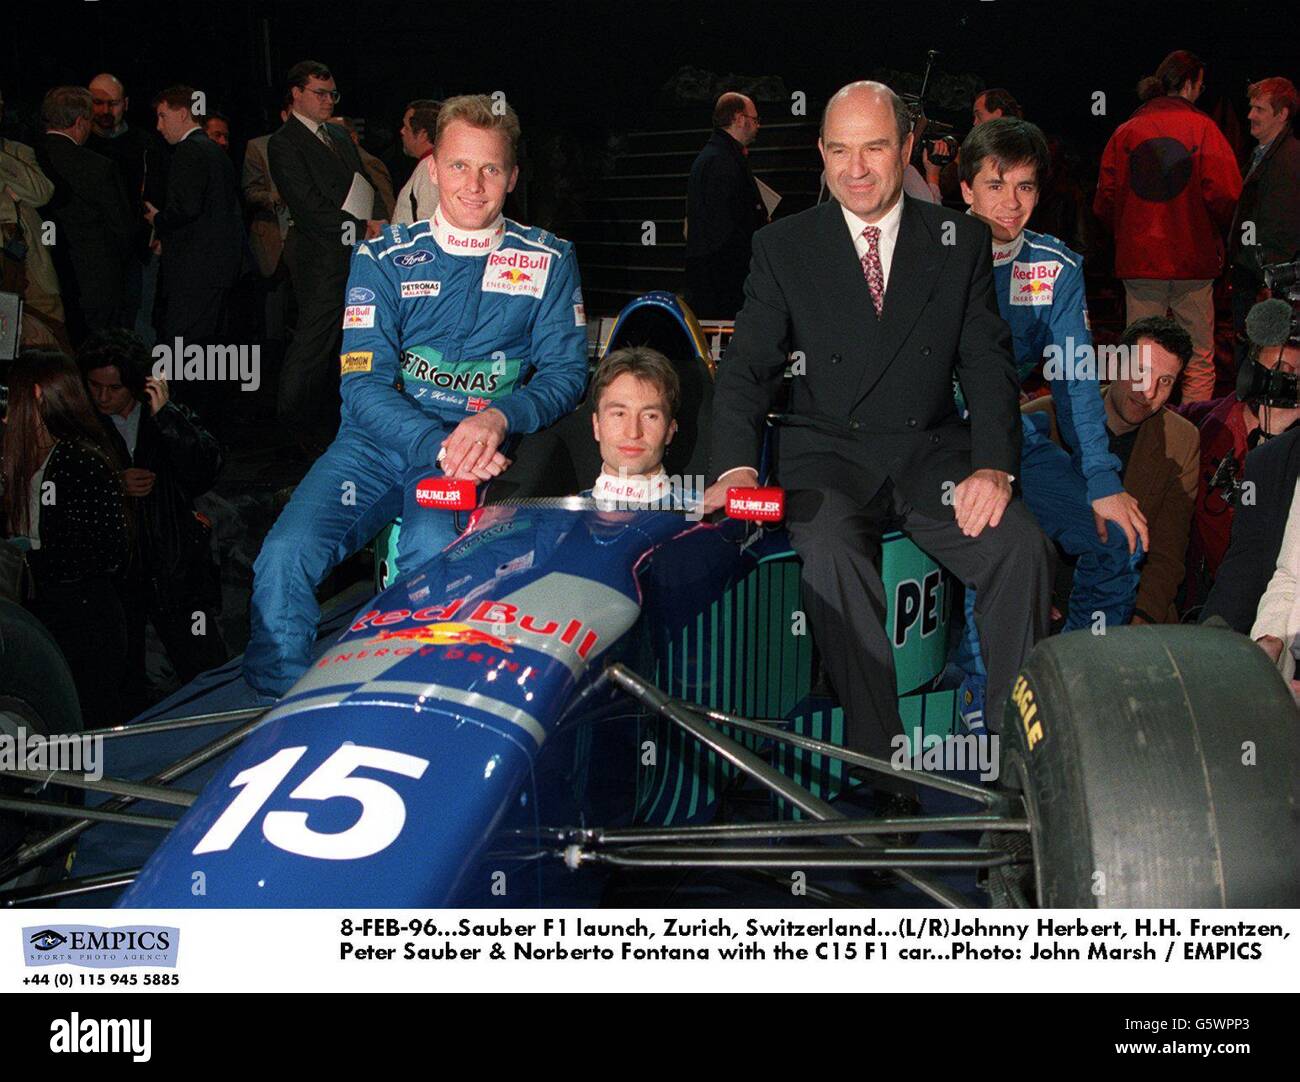 8-FEB-96. Sauber F1 launch, Zurich, Switzerland. (L/R)Johnny Herbert, H.H. Frentzen,rPeter Sauber & Norberto Fontana with the C15 F1 car Stock Photo